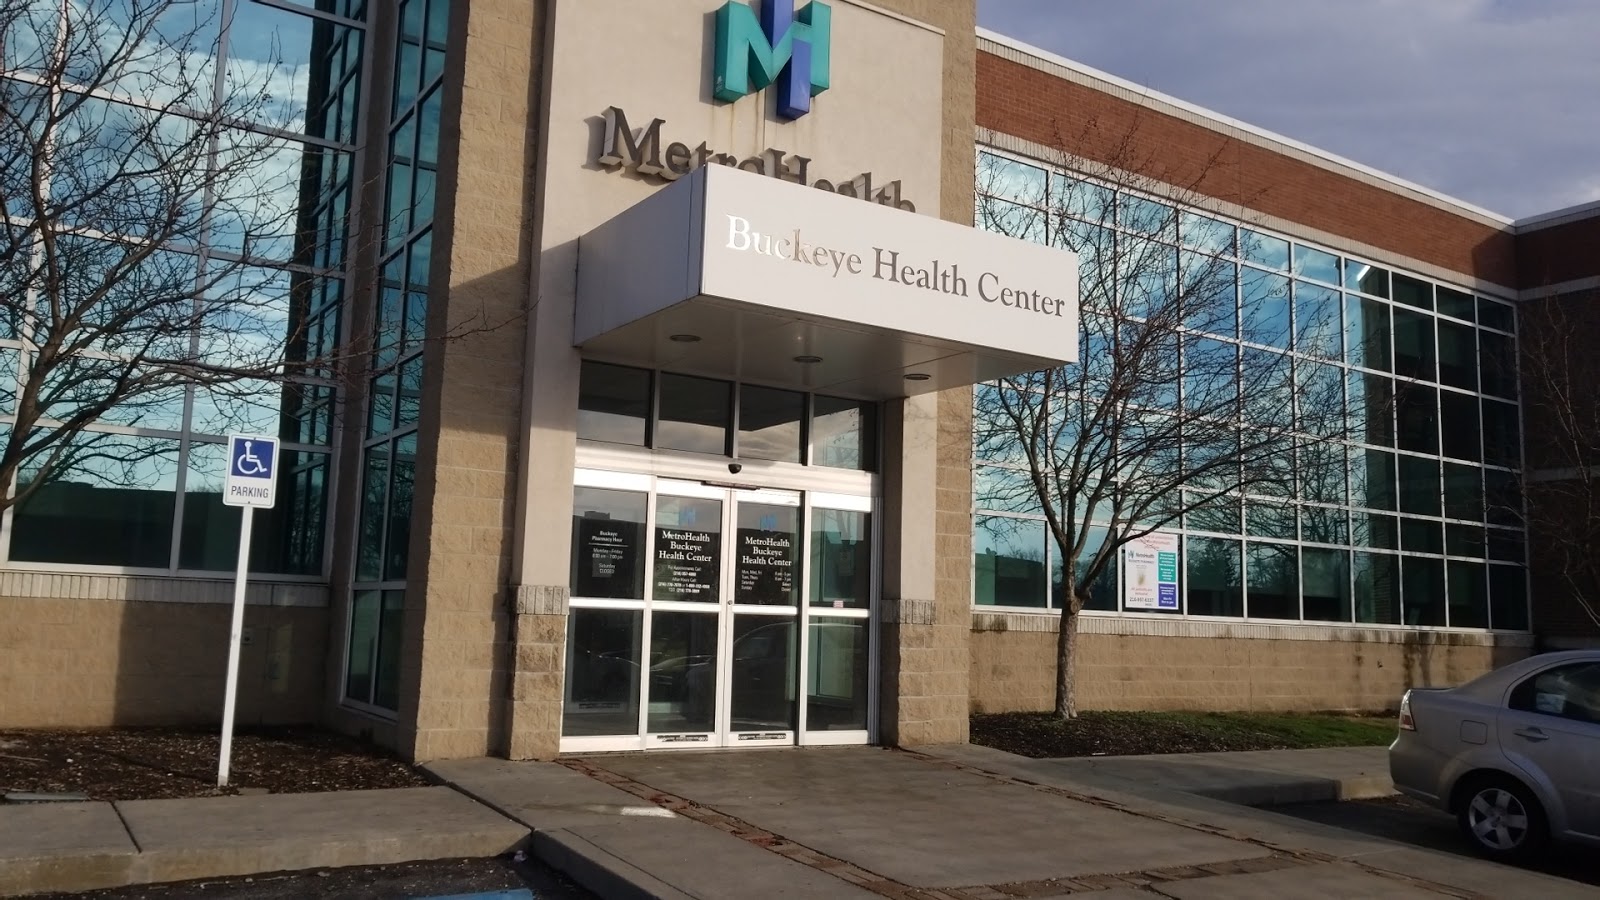 MetroHealth Buckeye Health Center